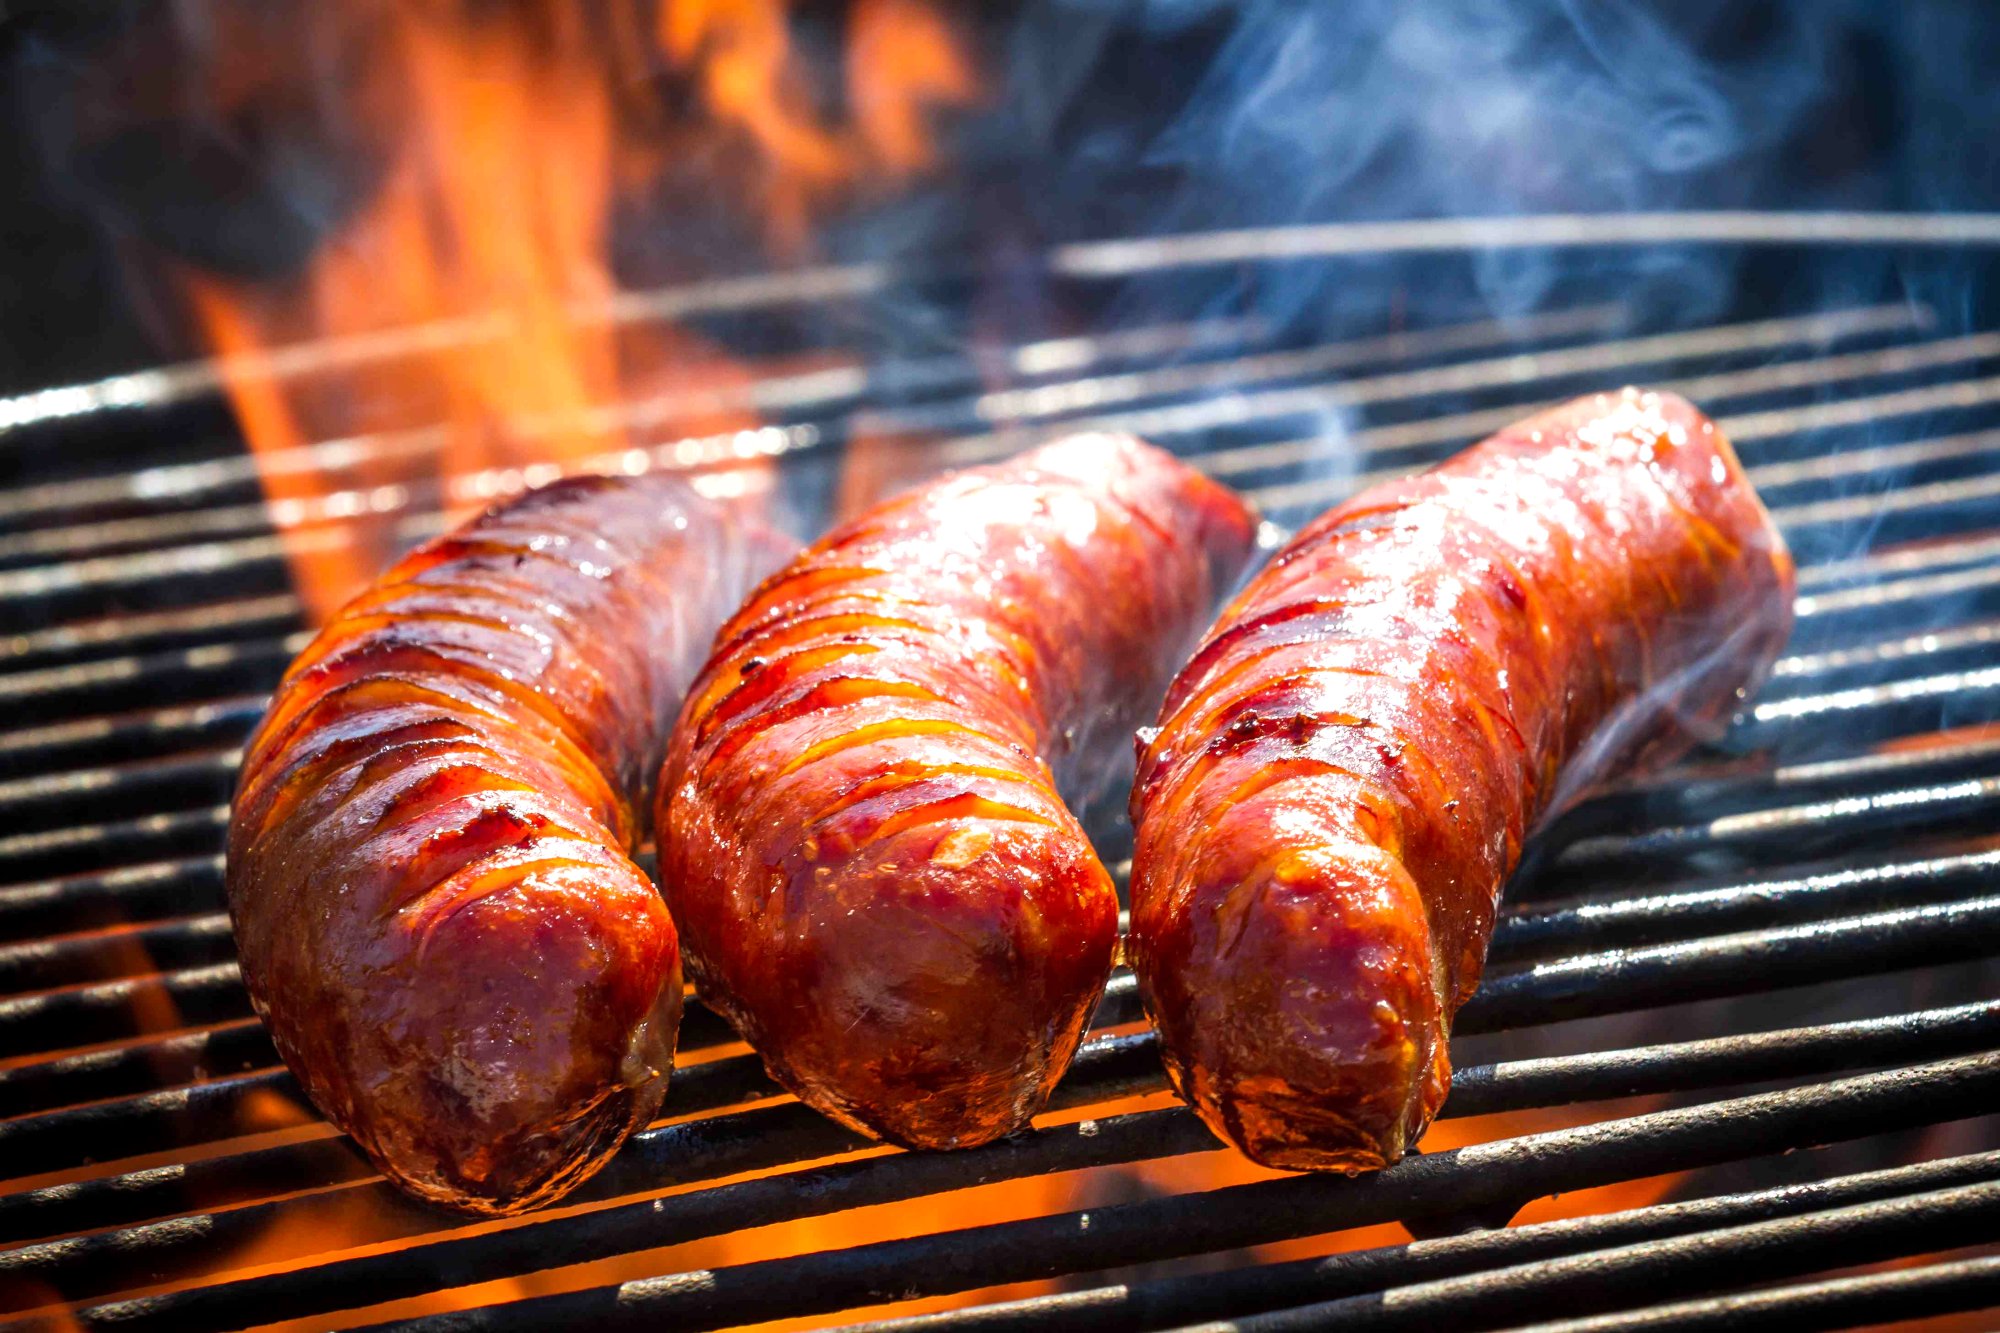 3 BBQ Sausages Google image from http://sausageman.co.uk/wp-content/uploads/2015/03/sausagesforweb.jpg